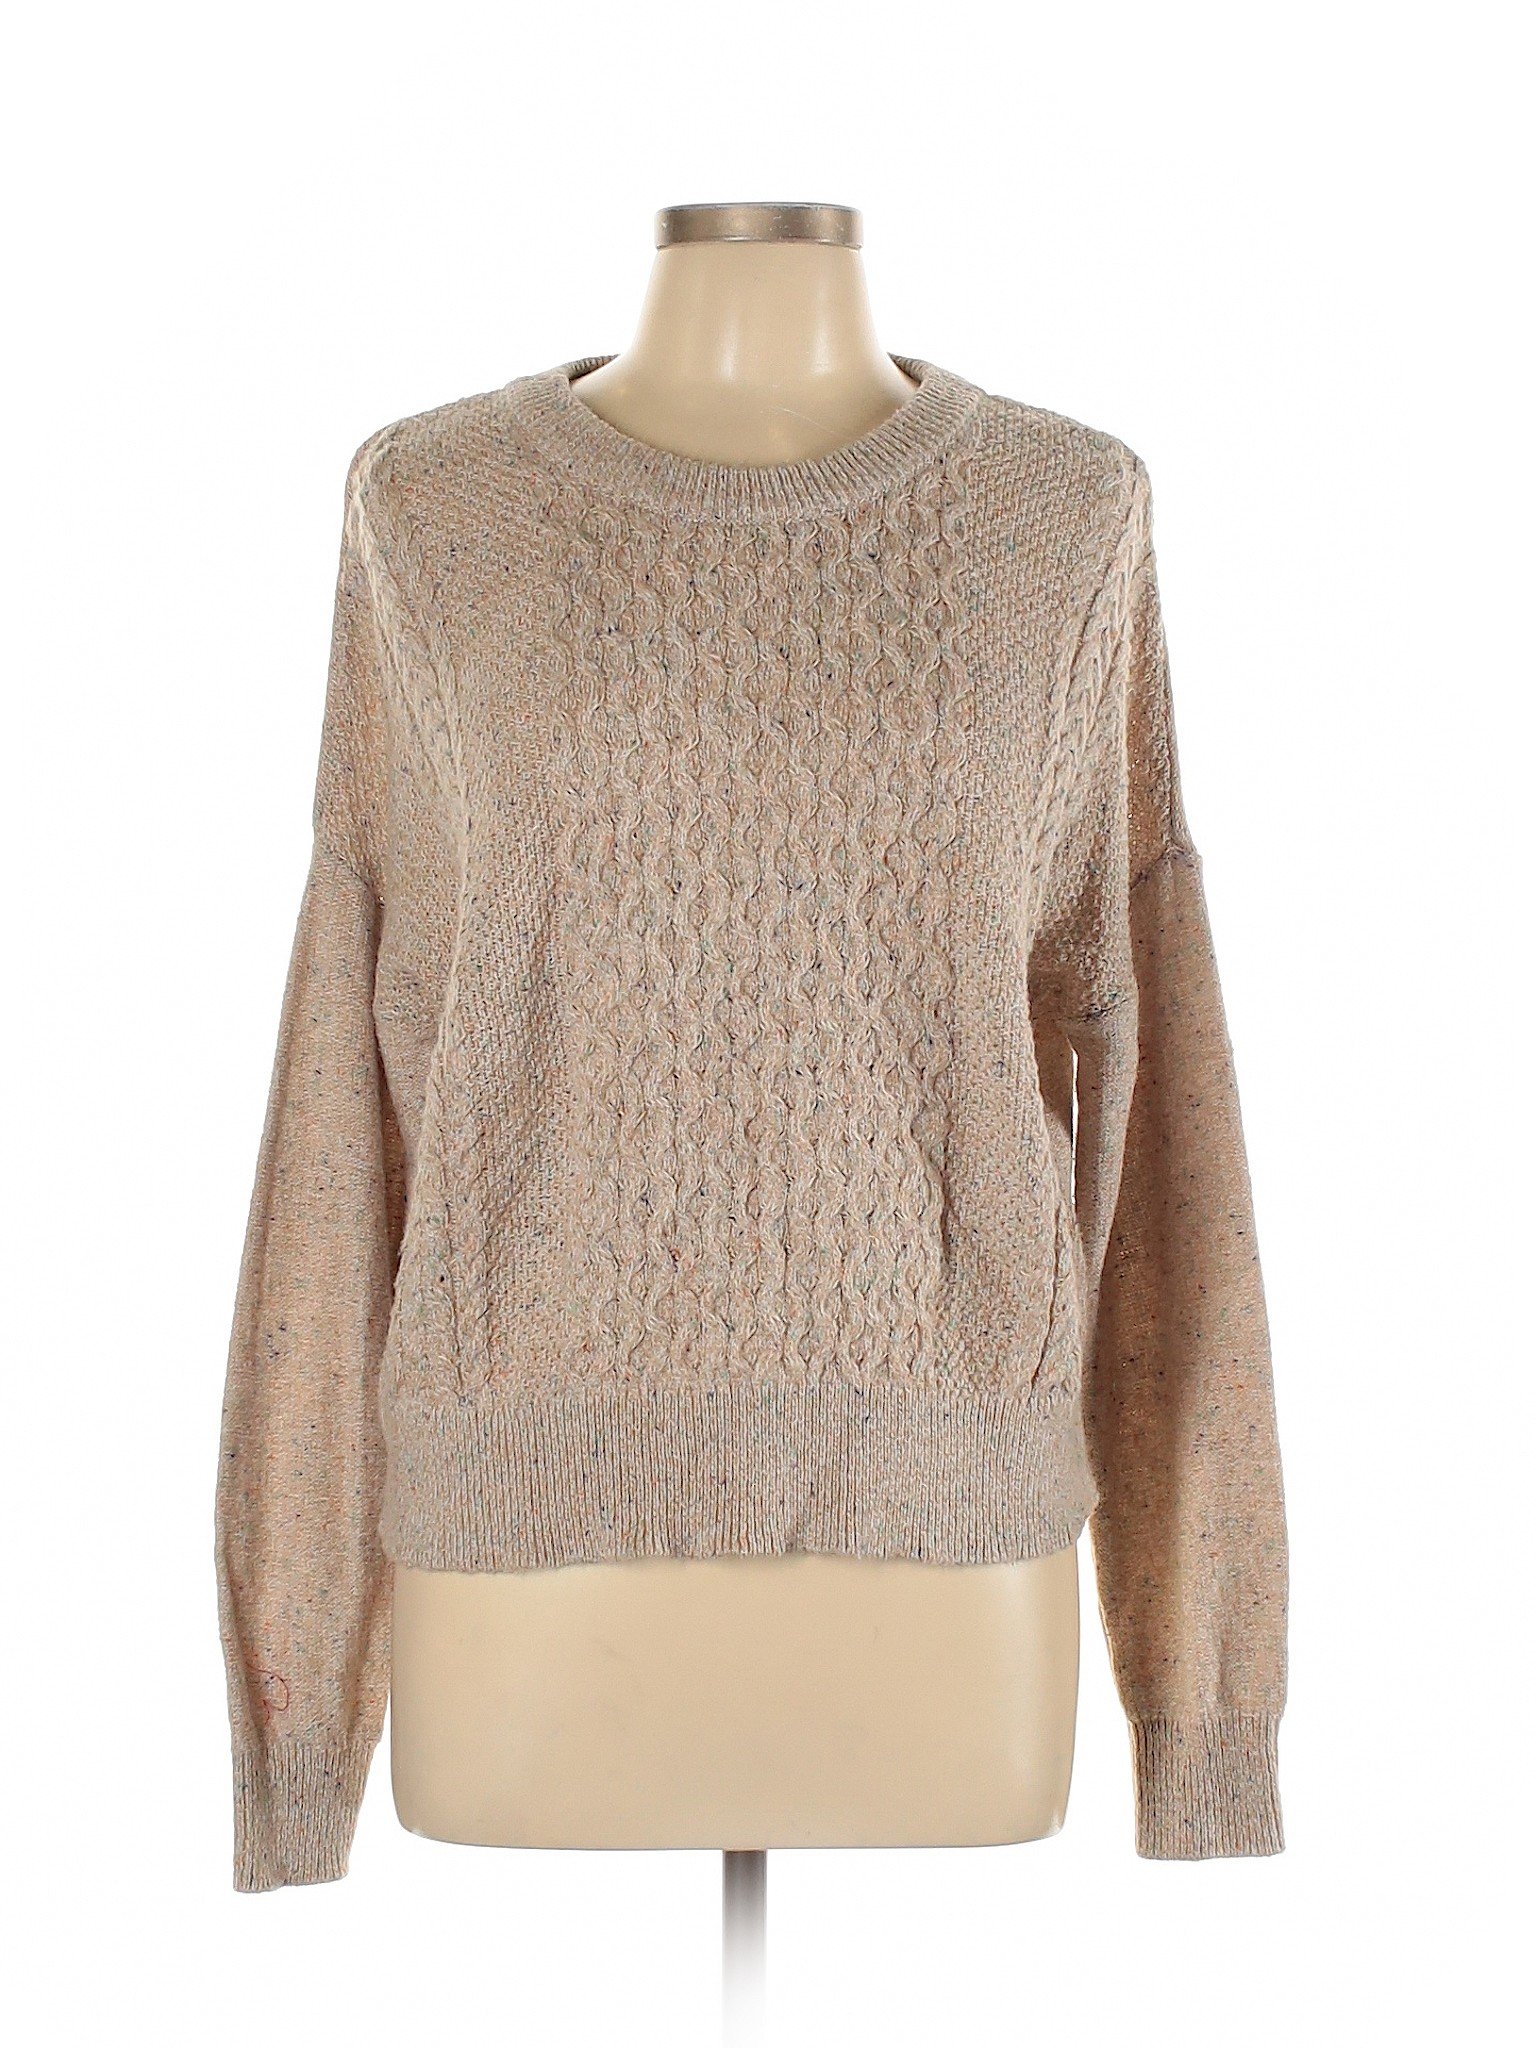 Mossimo Supply Co. Women Brown Pullover Sweater L | eBay